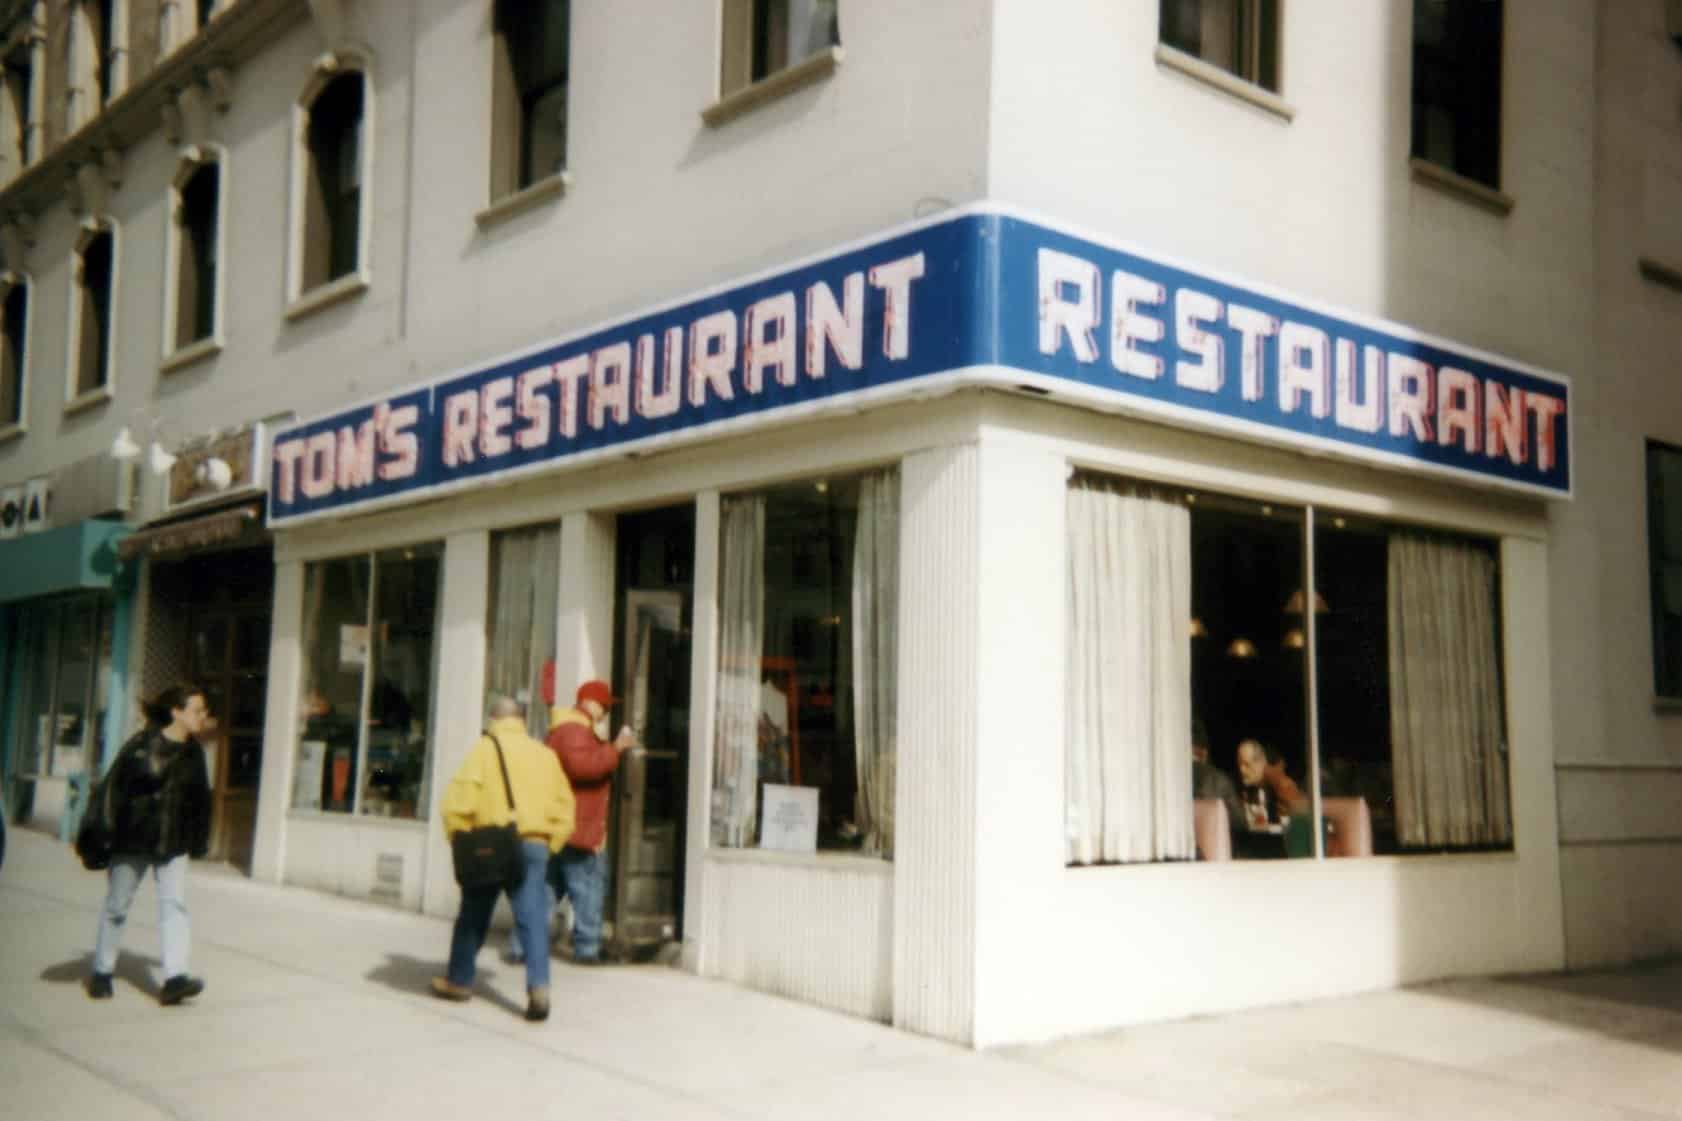 Restaurant featured in Seinfeld